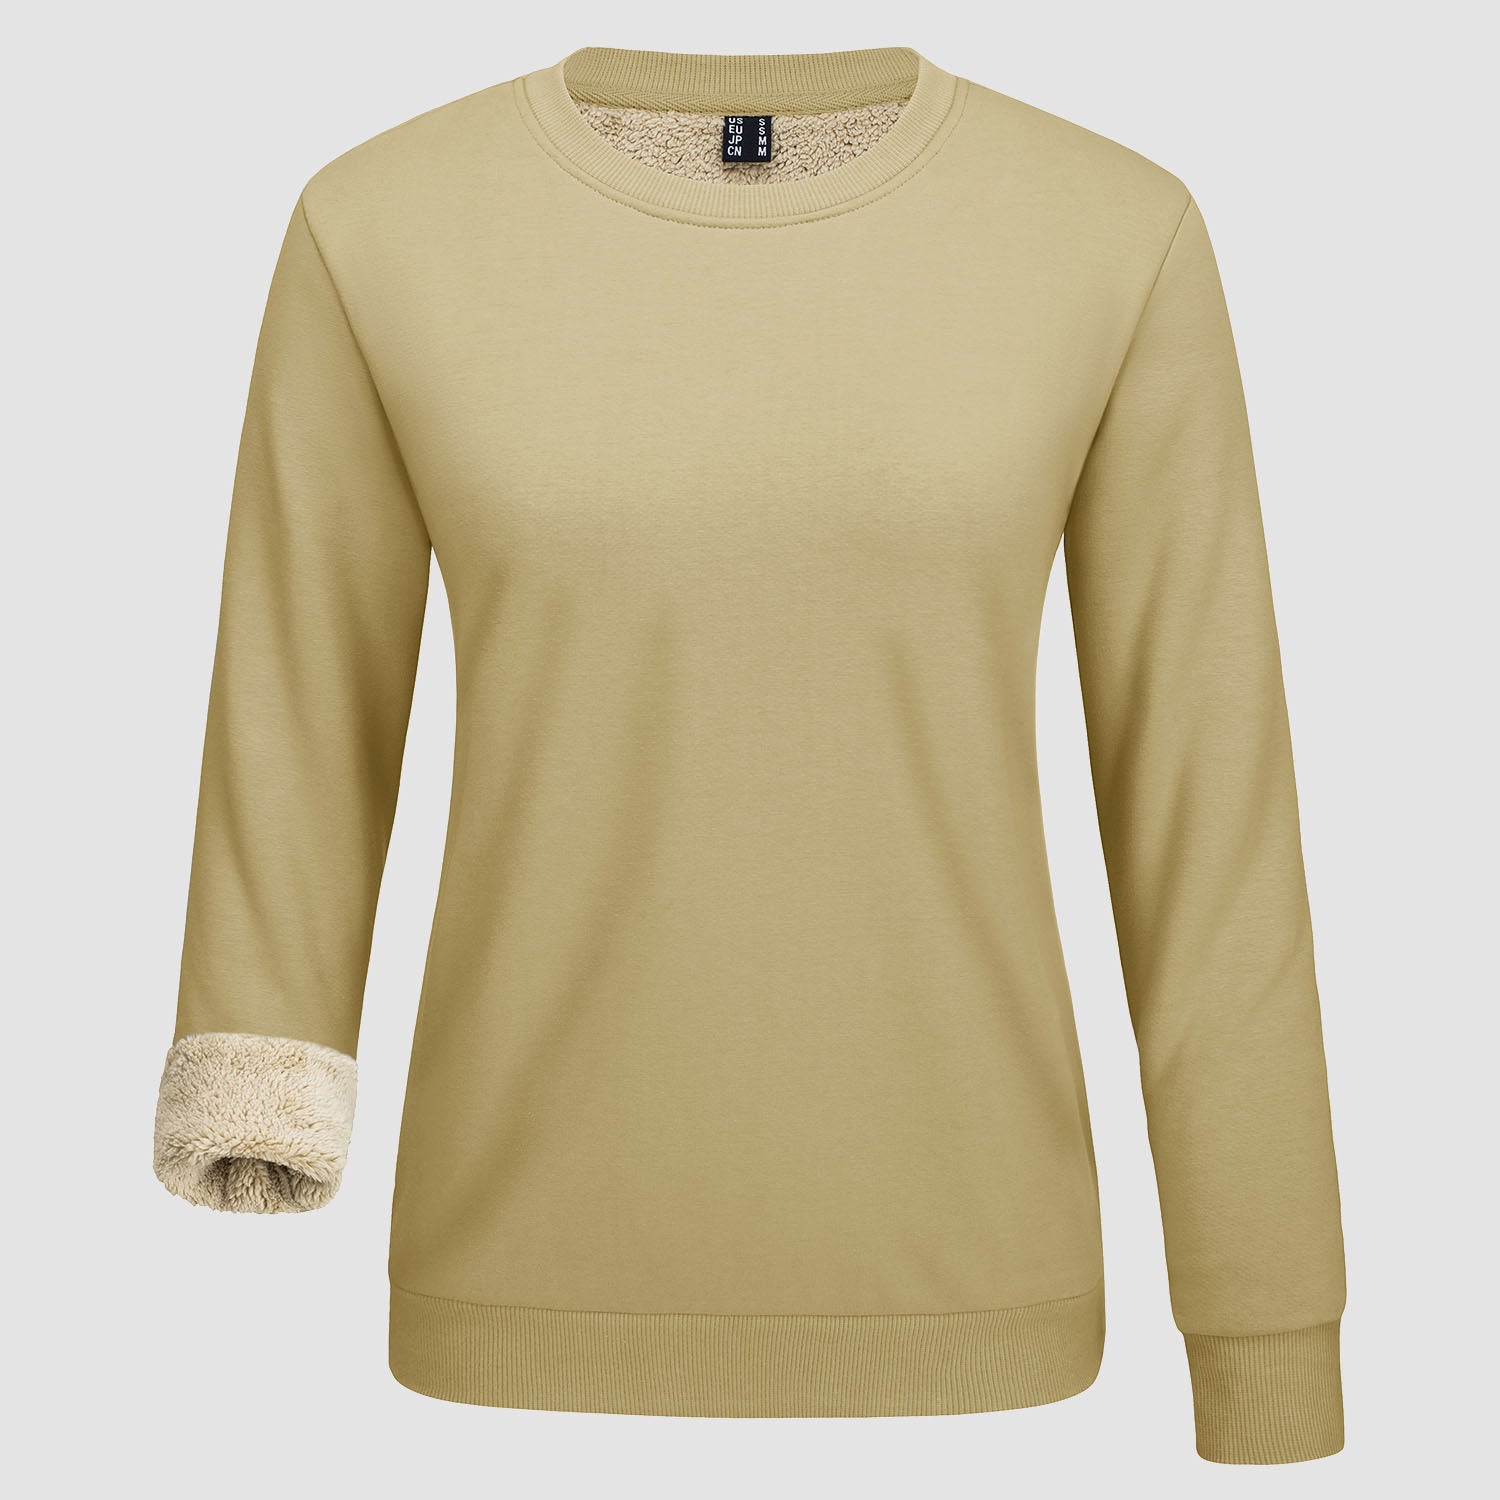 Women's Fleece Lined Sweatshirt Pullover Basic Tops Warm Crewneck Winter Sweater Underwear